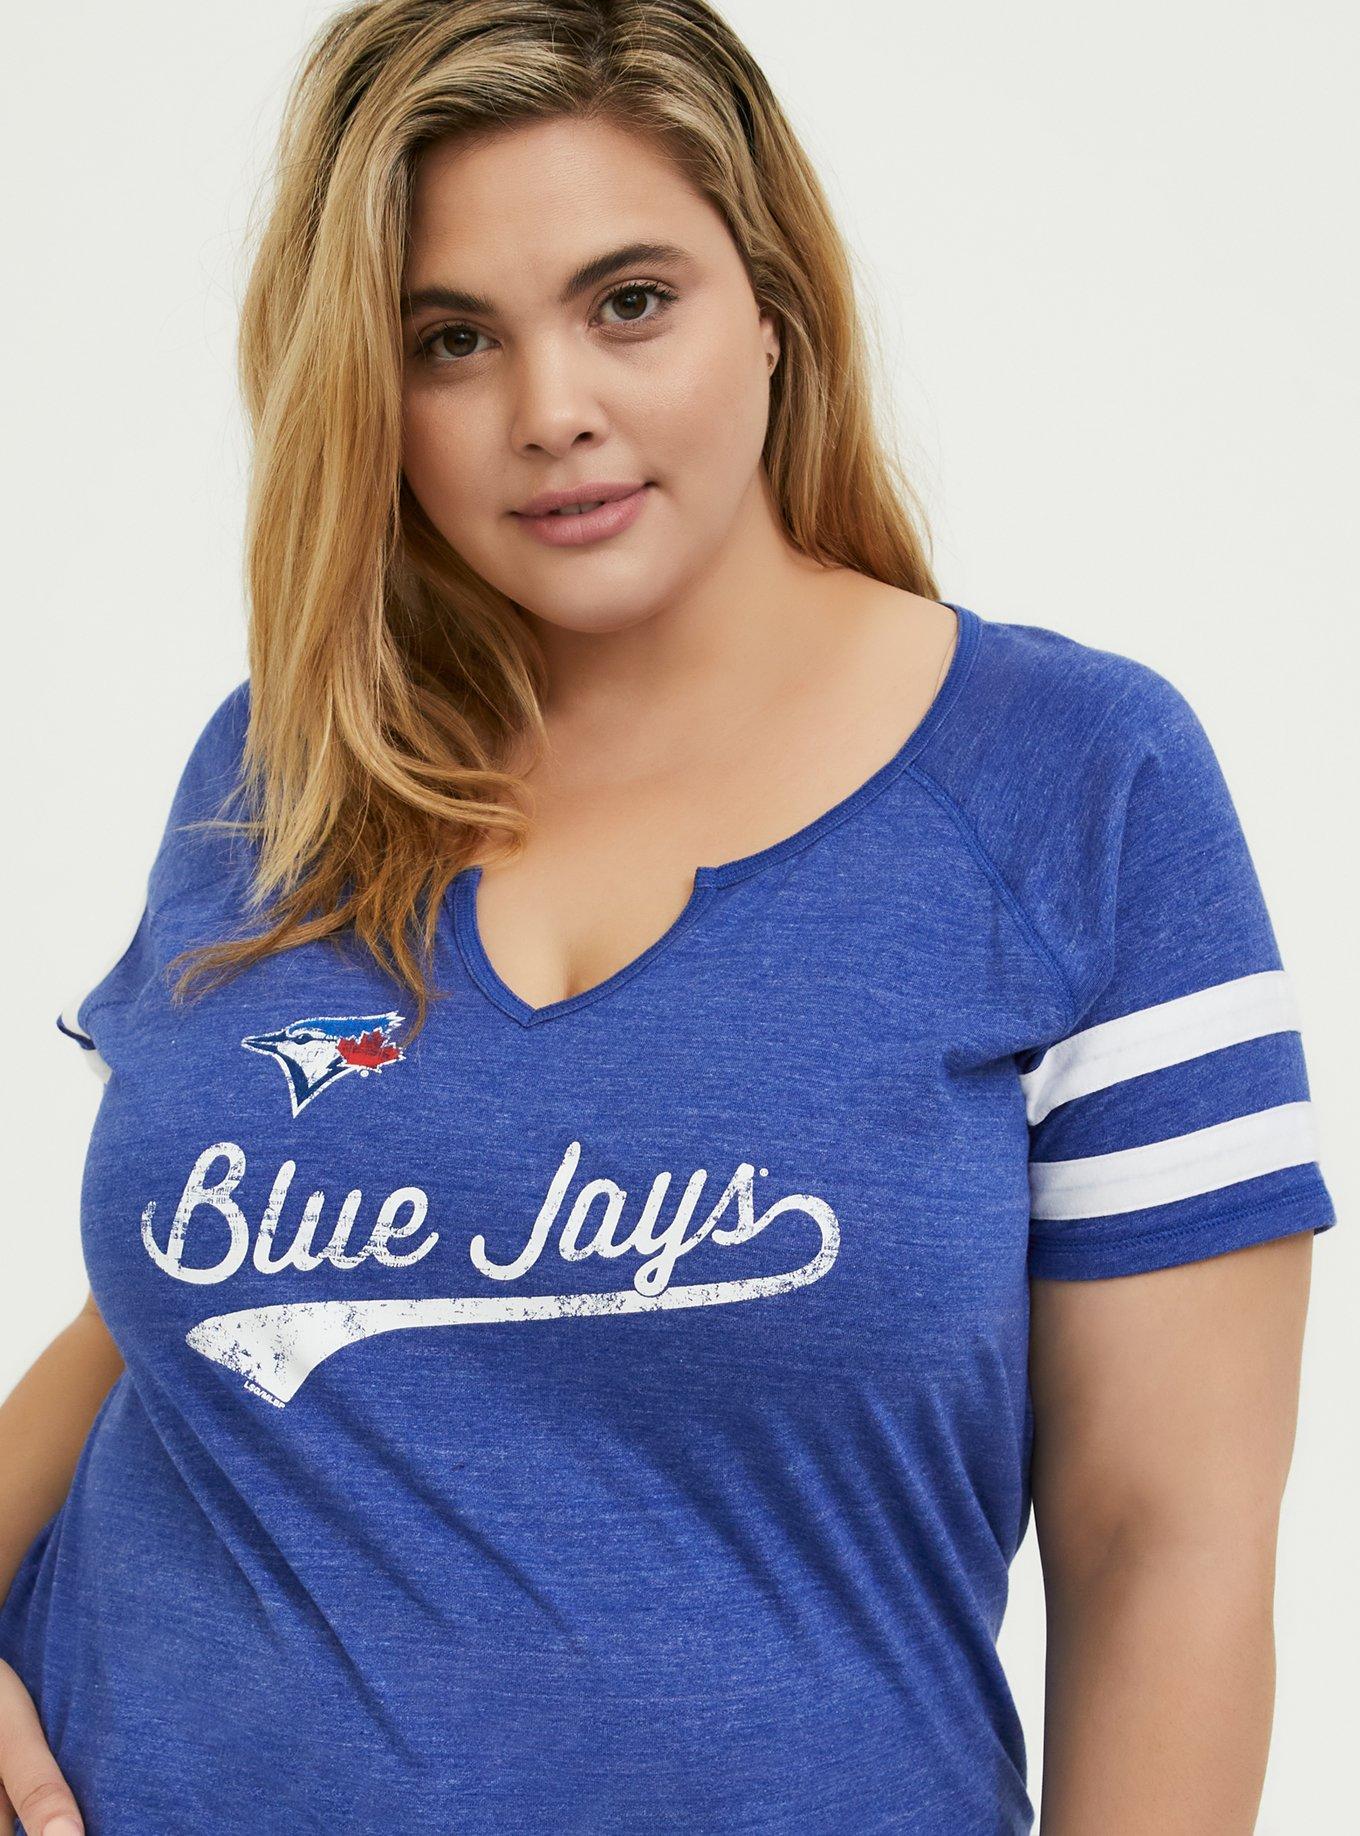 MLB Toronto BJ S/S Tee Off-White Tops T-Shirts Blue